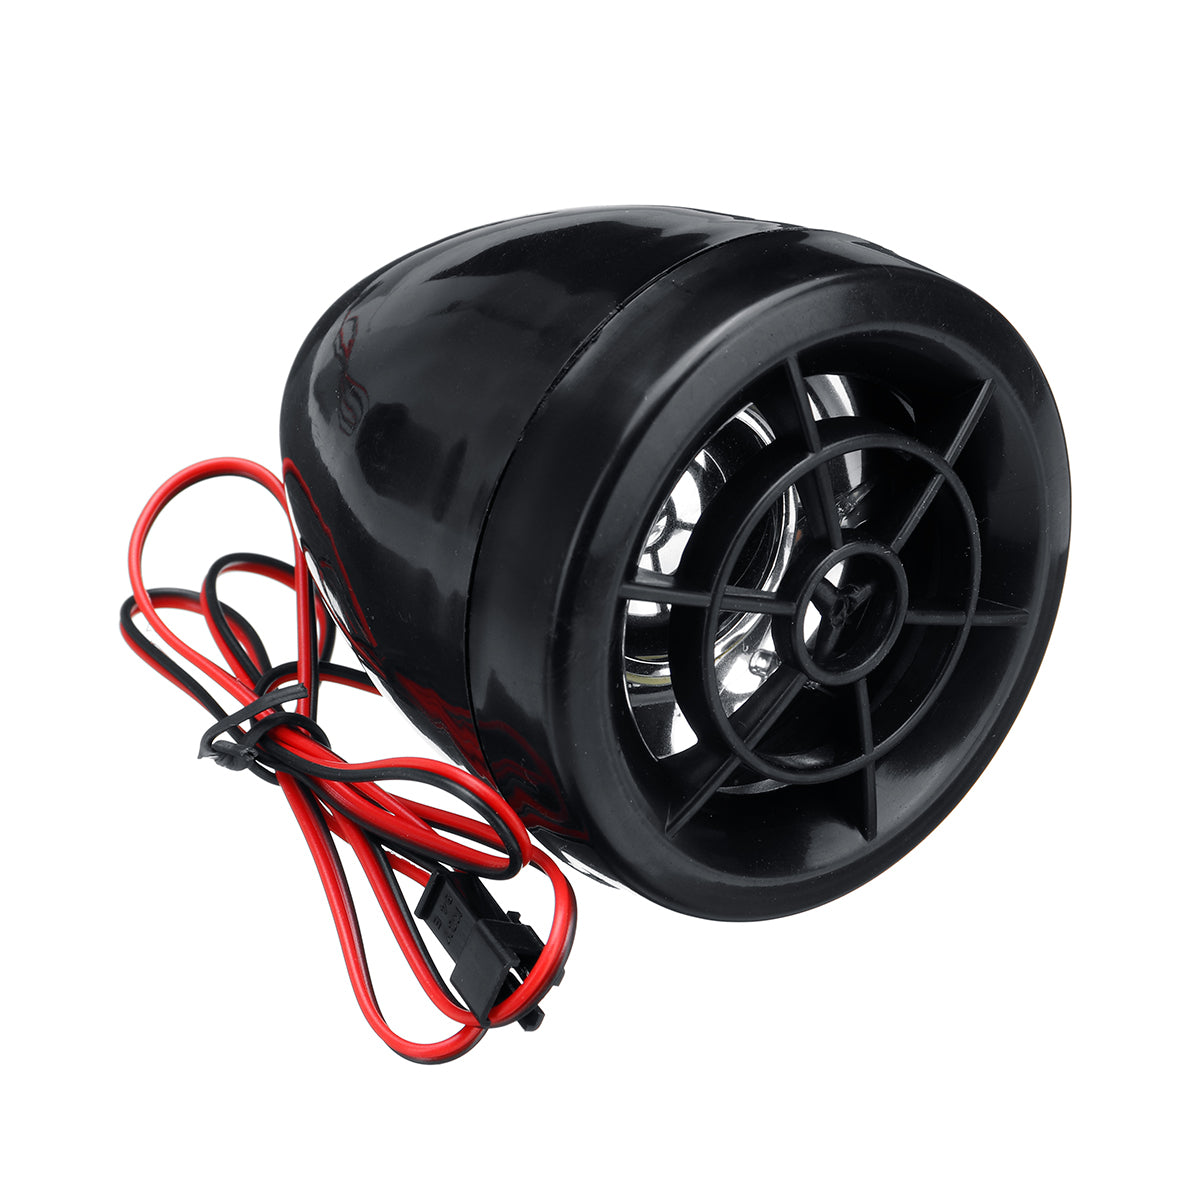 Black 12V Anti-theft Motorcycle Alarm System MP3 FM SD USB Remote Engine Start+2 Horns